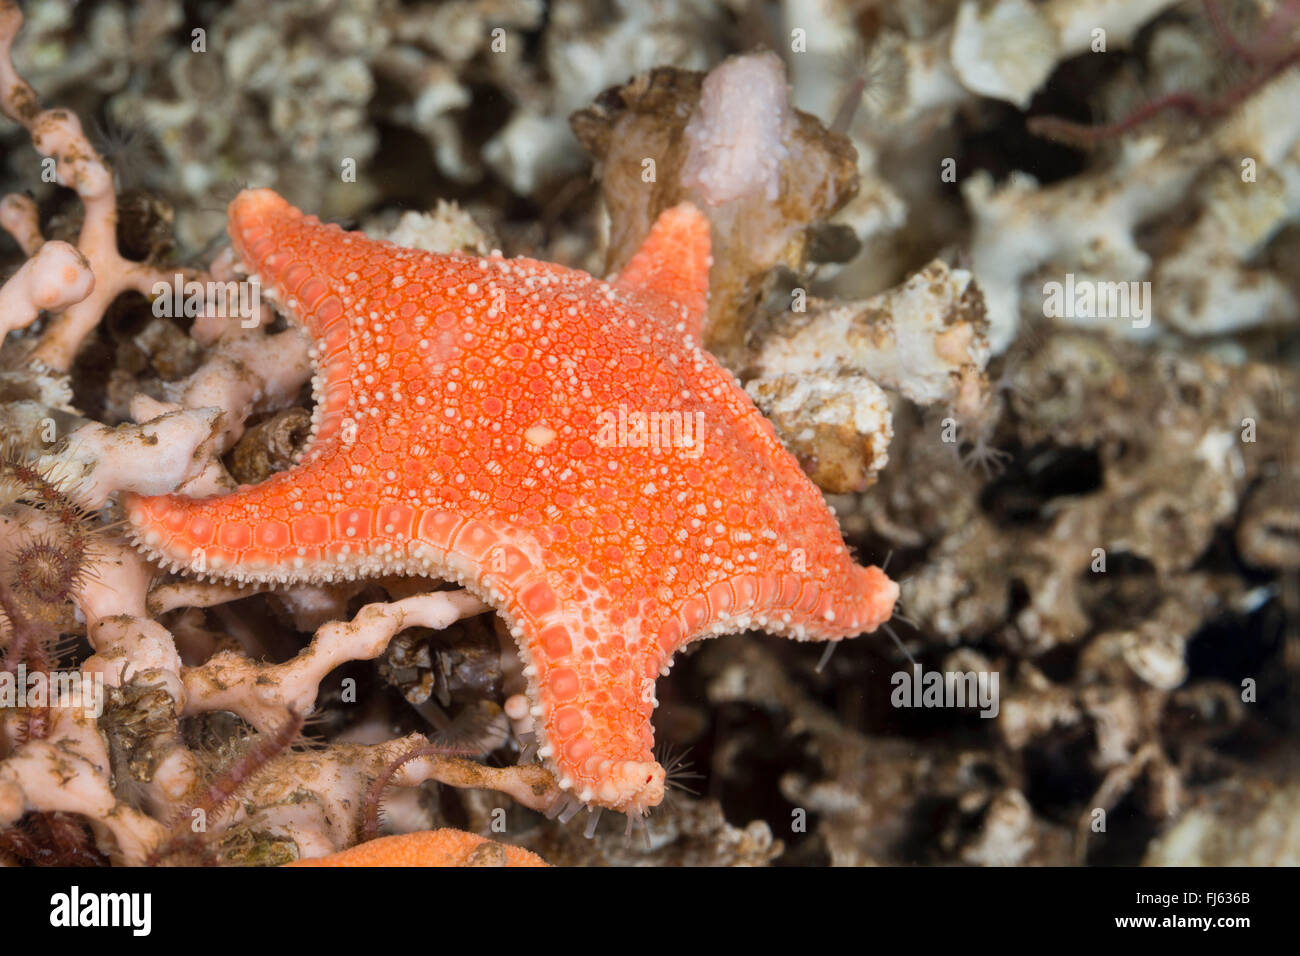 Cojín rígido, Arctic Star (estrella del cojín, Hippasteria Hippasteria phrygiana trojana, Hippasteria insignis), sobre un coral Foto de stock